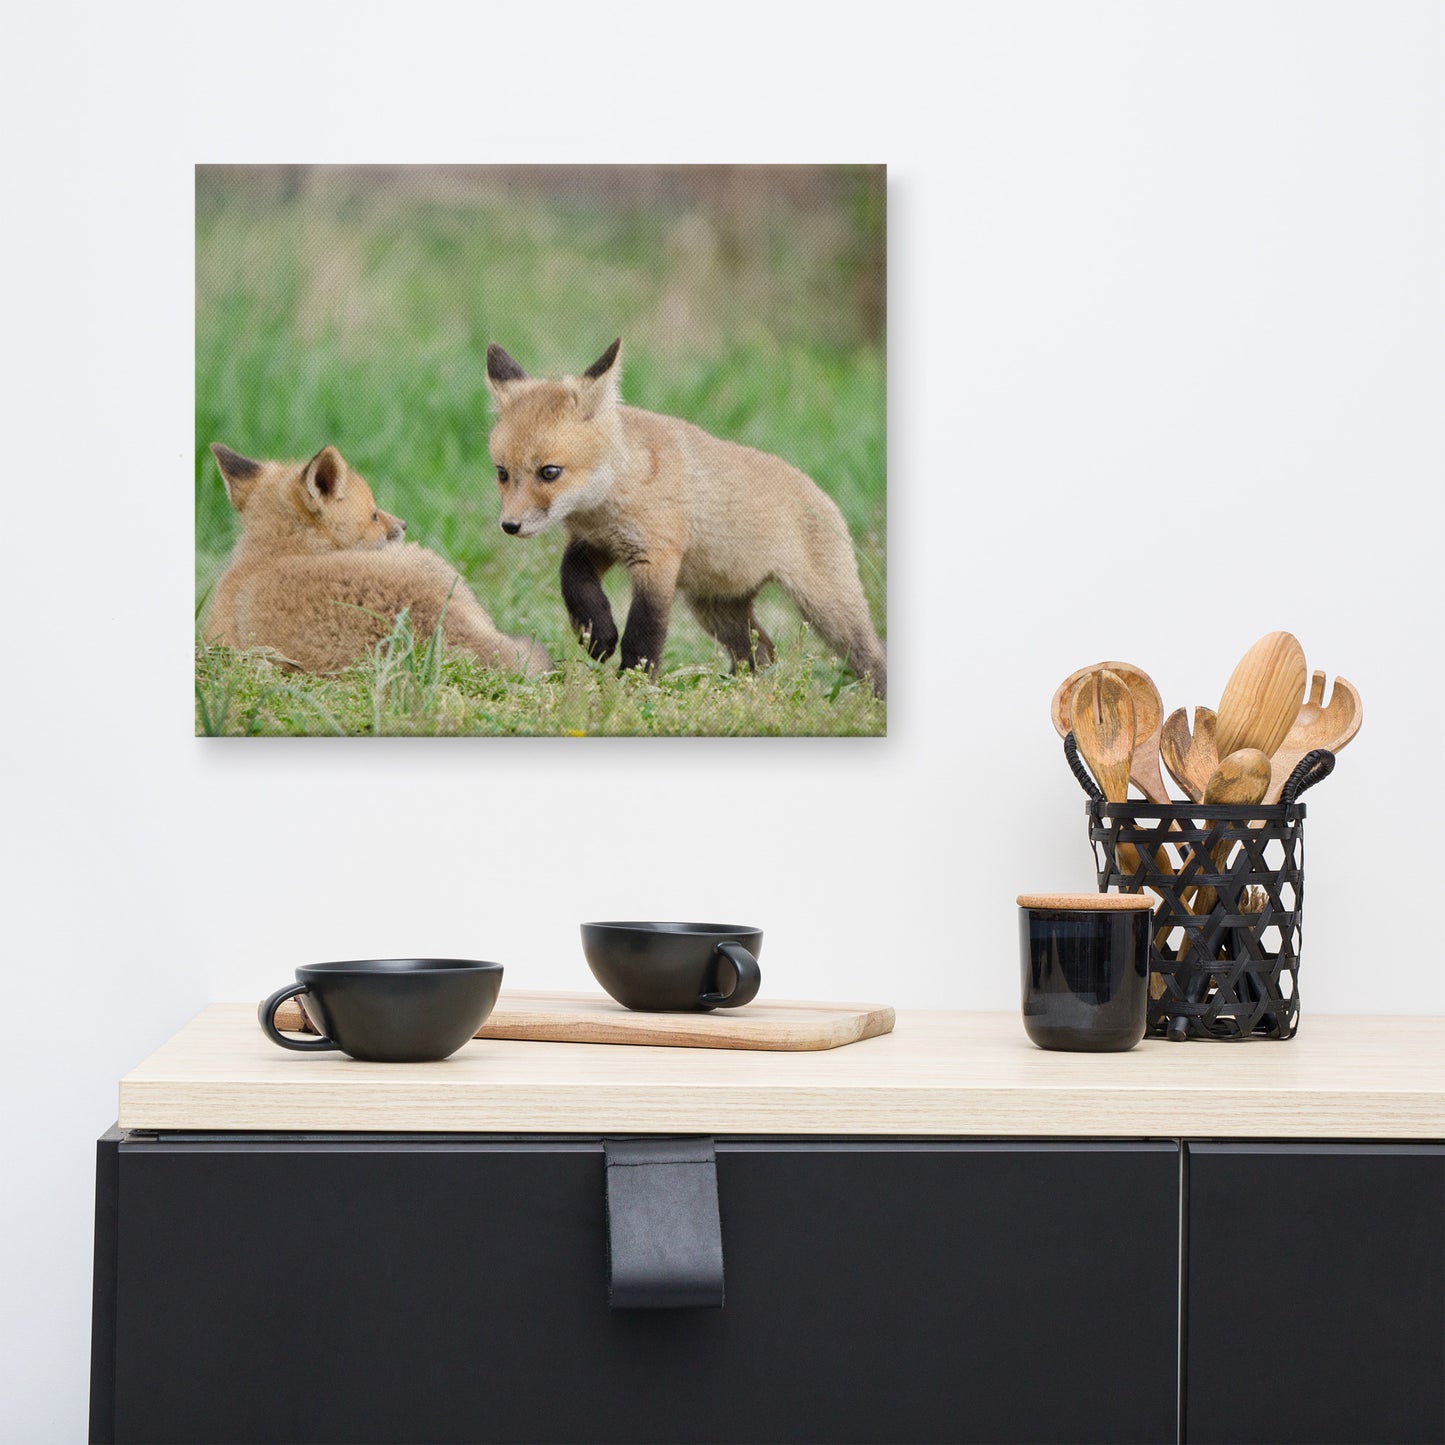 Farmhouse Kitchen Art: Fox Pups / Kits - Coming to Get You Animal / Wildlife Photograph Canvas Wall Art Print - Artwork - Wall Decor